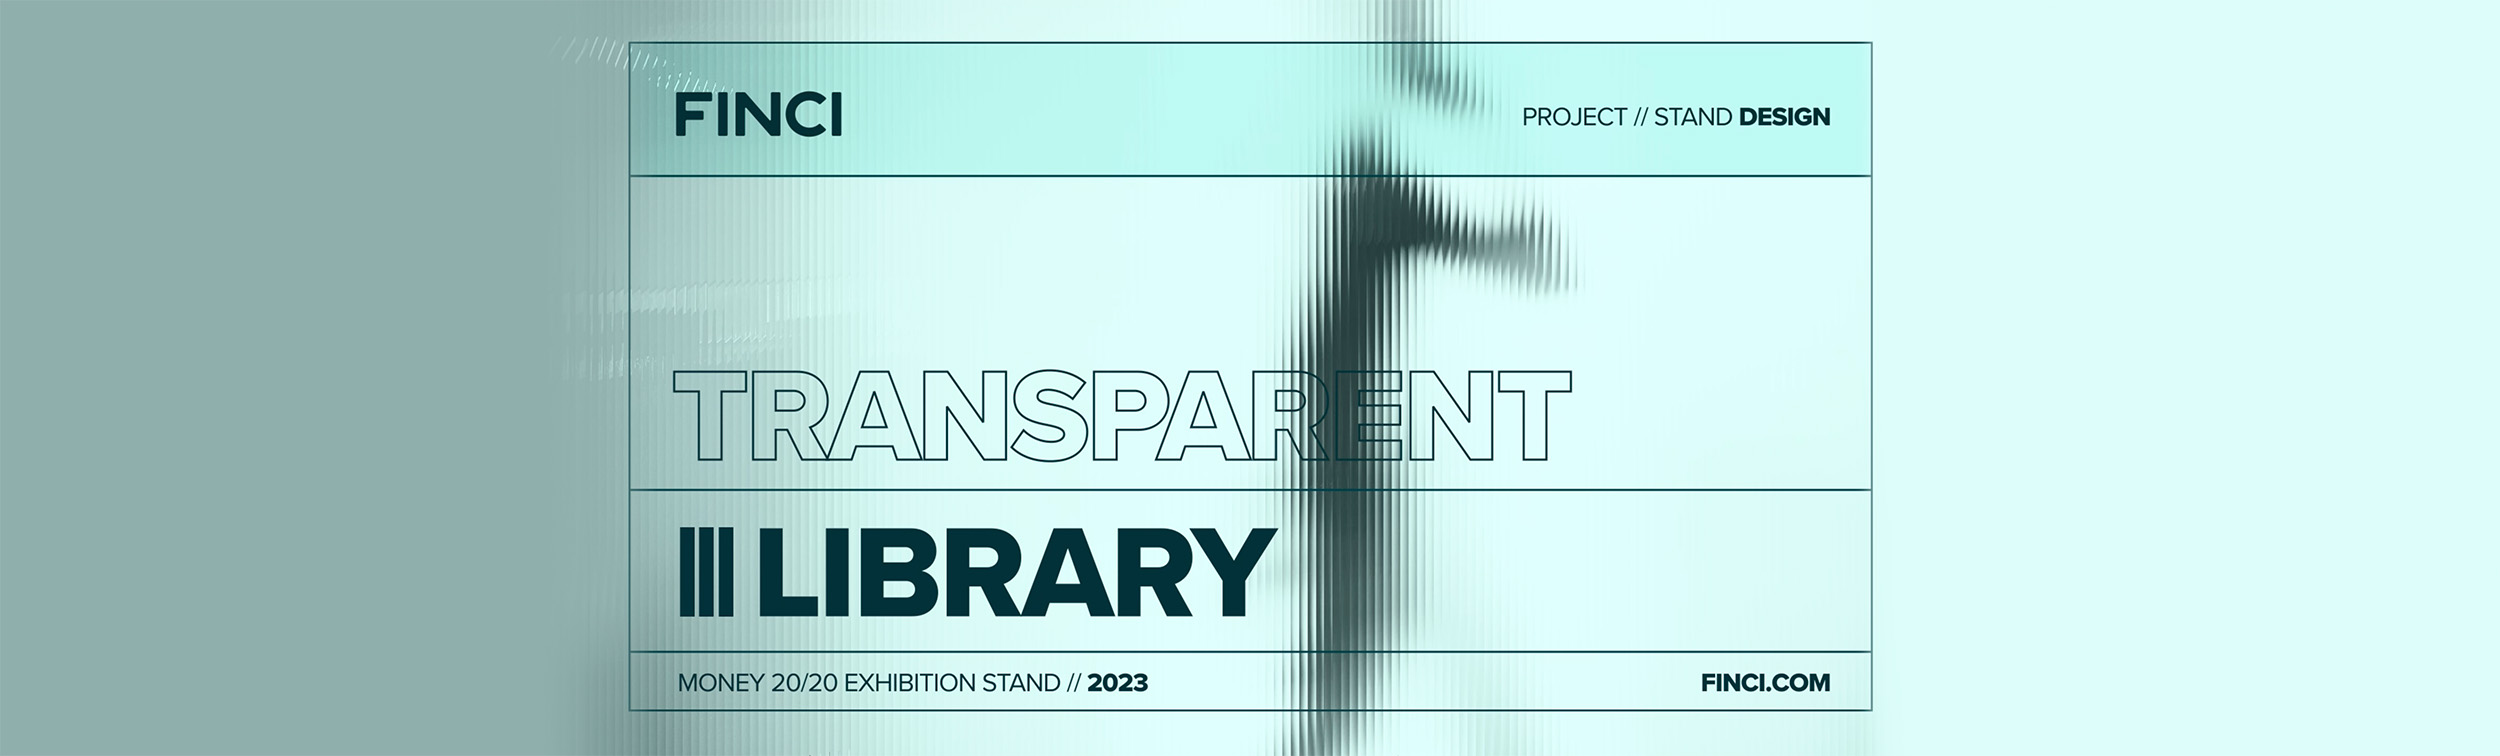 Finci Money 2020 Project Stand Design